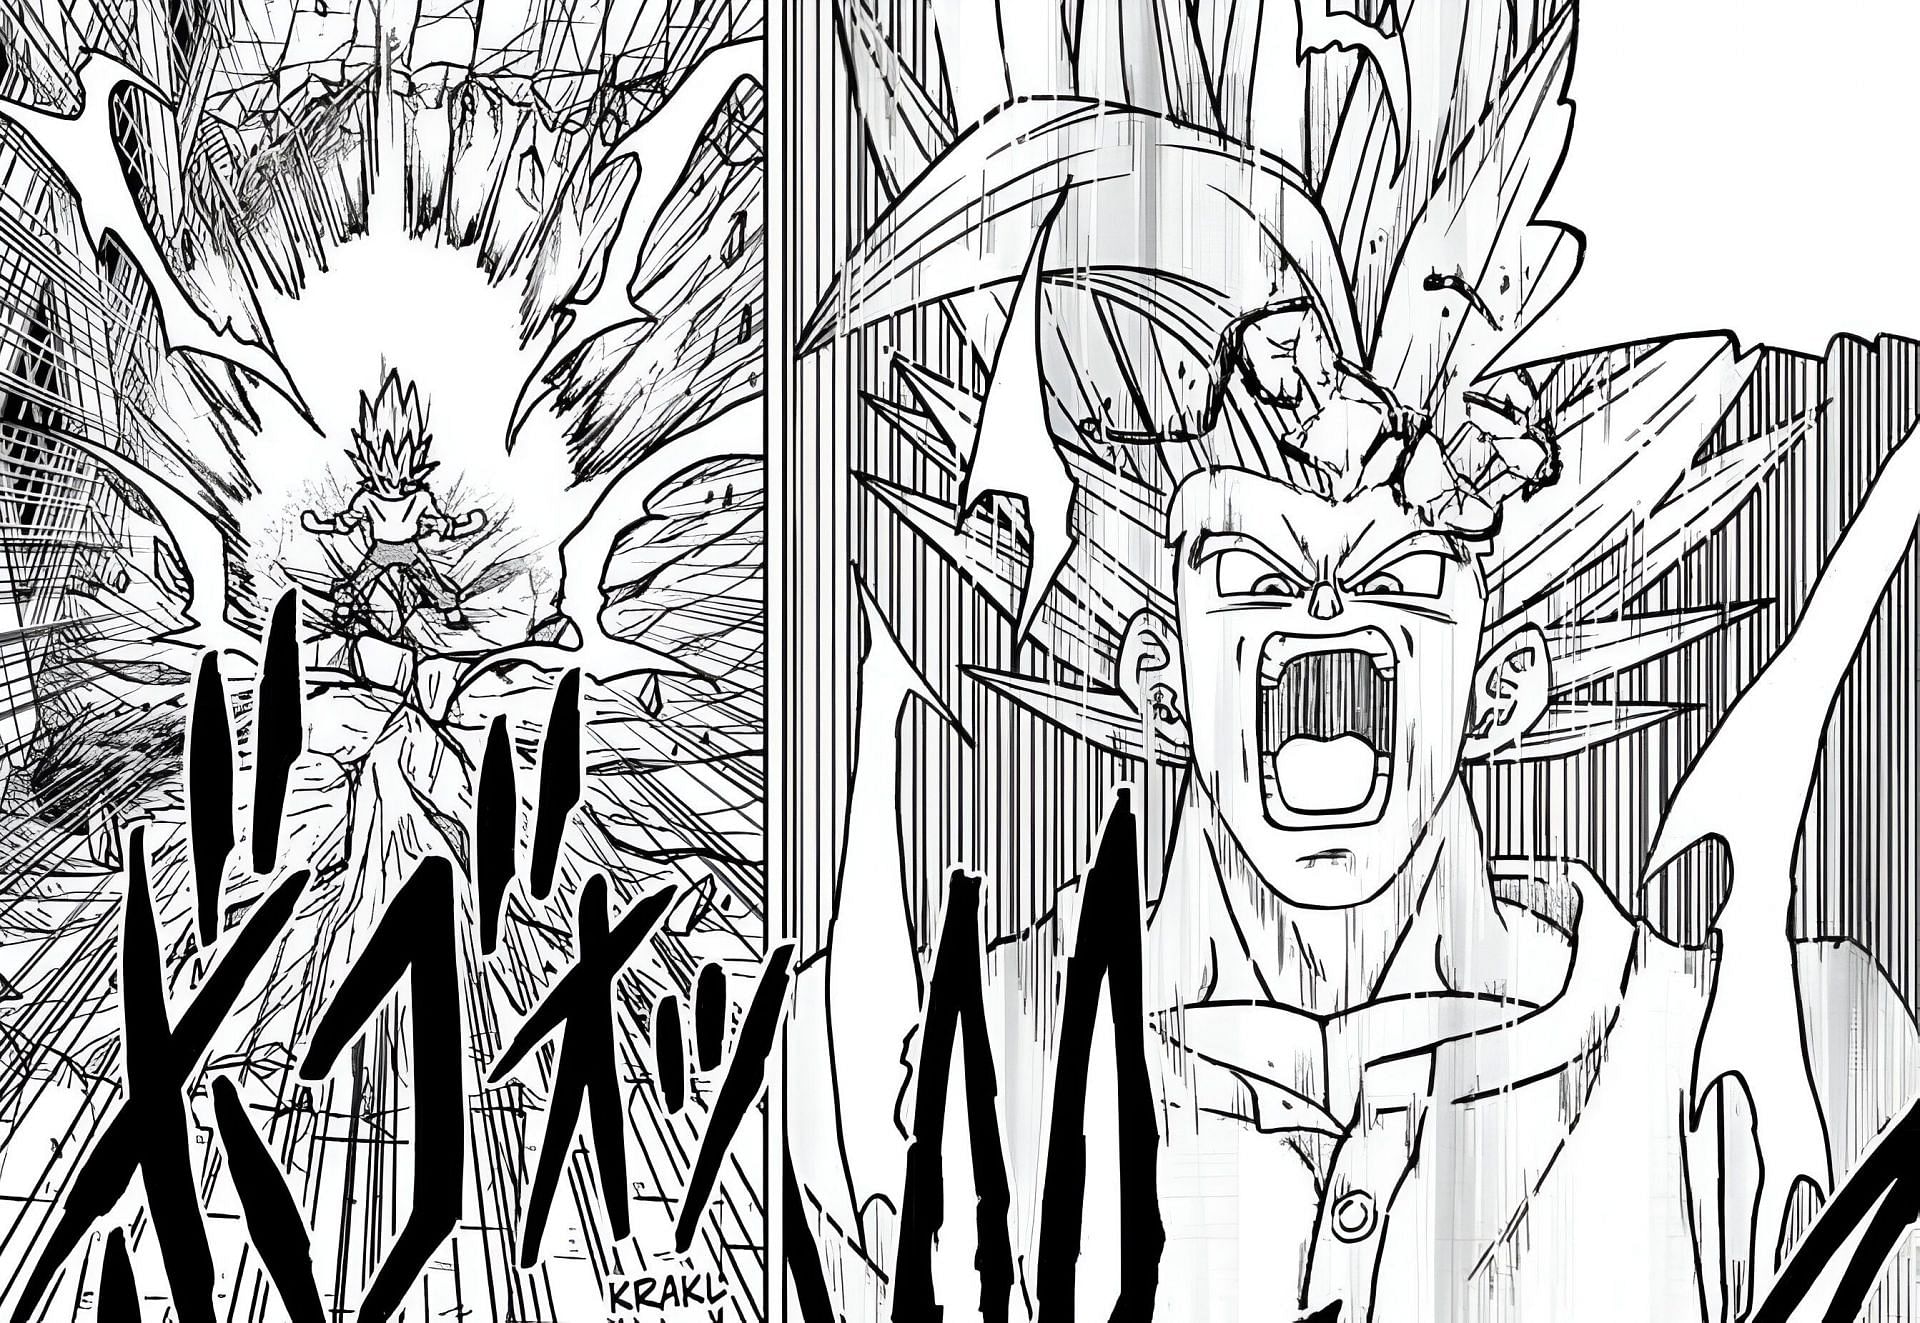 Beast Gohan as seen in the Dragon Ball Super manga (Image via Shueisha)